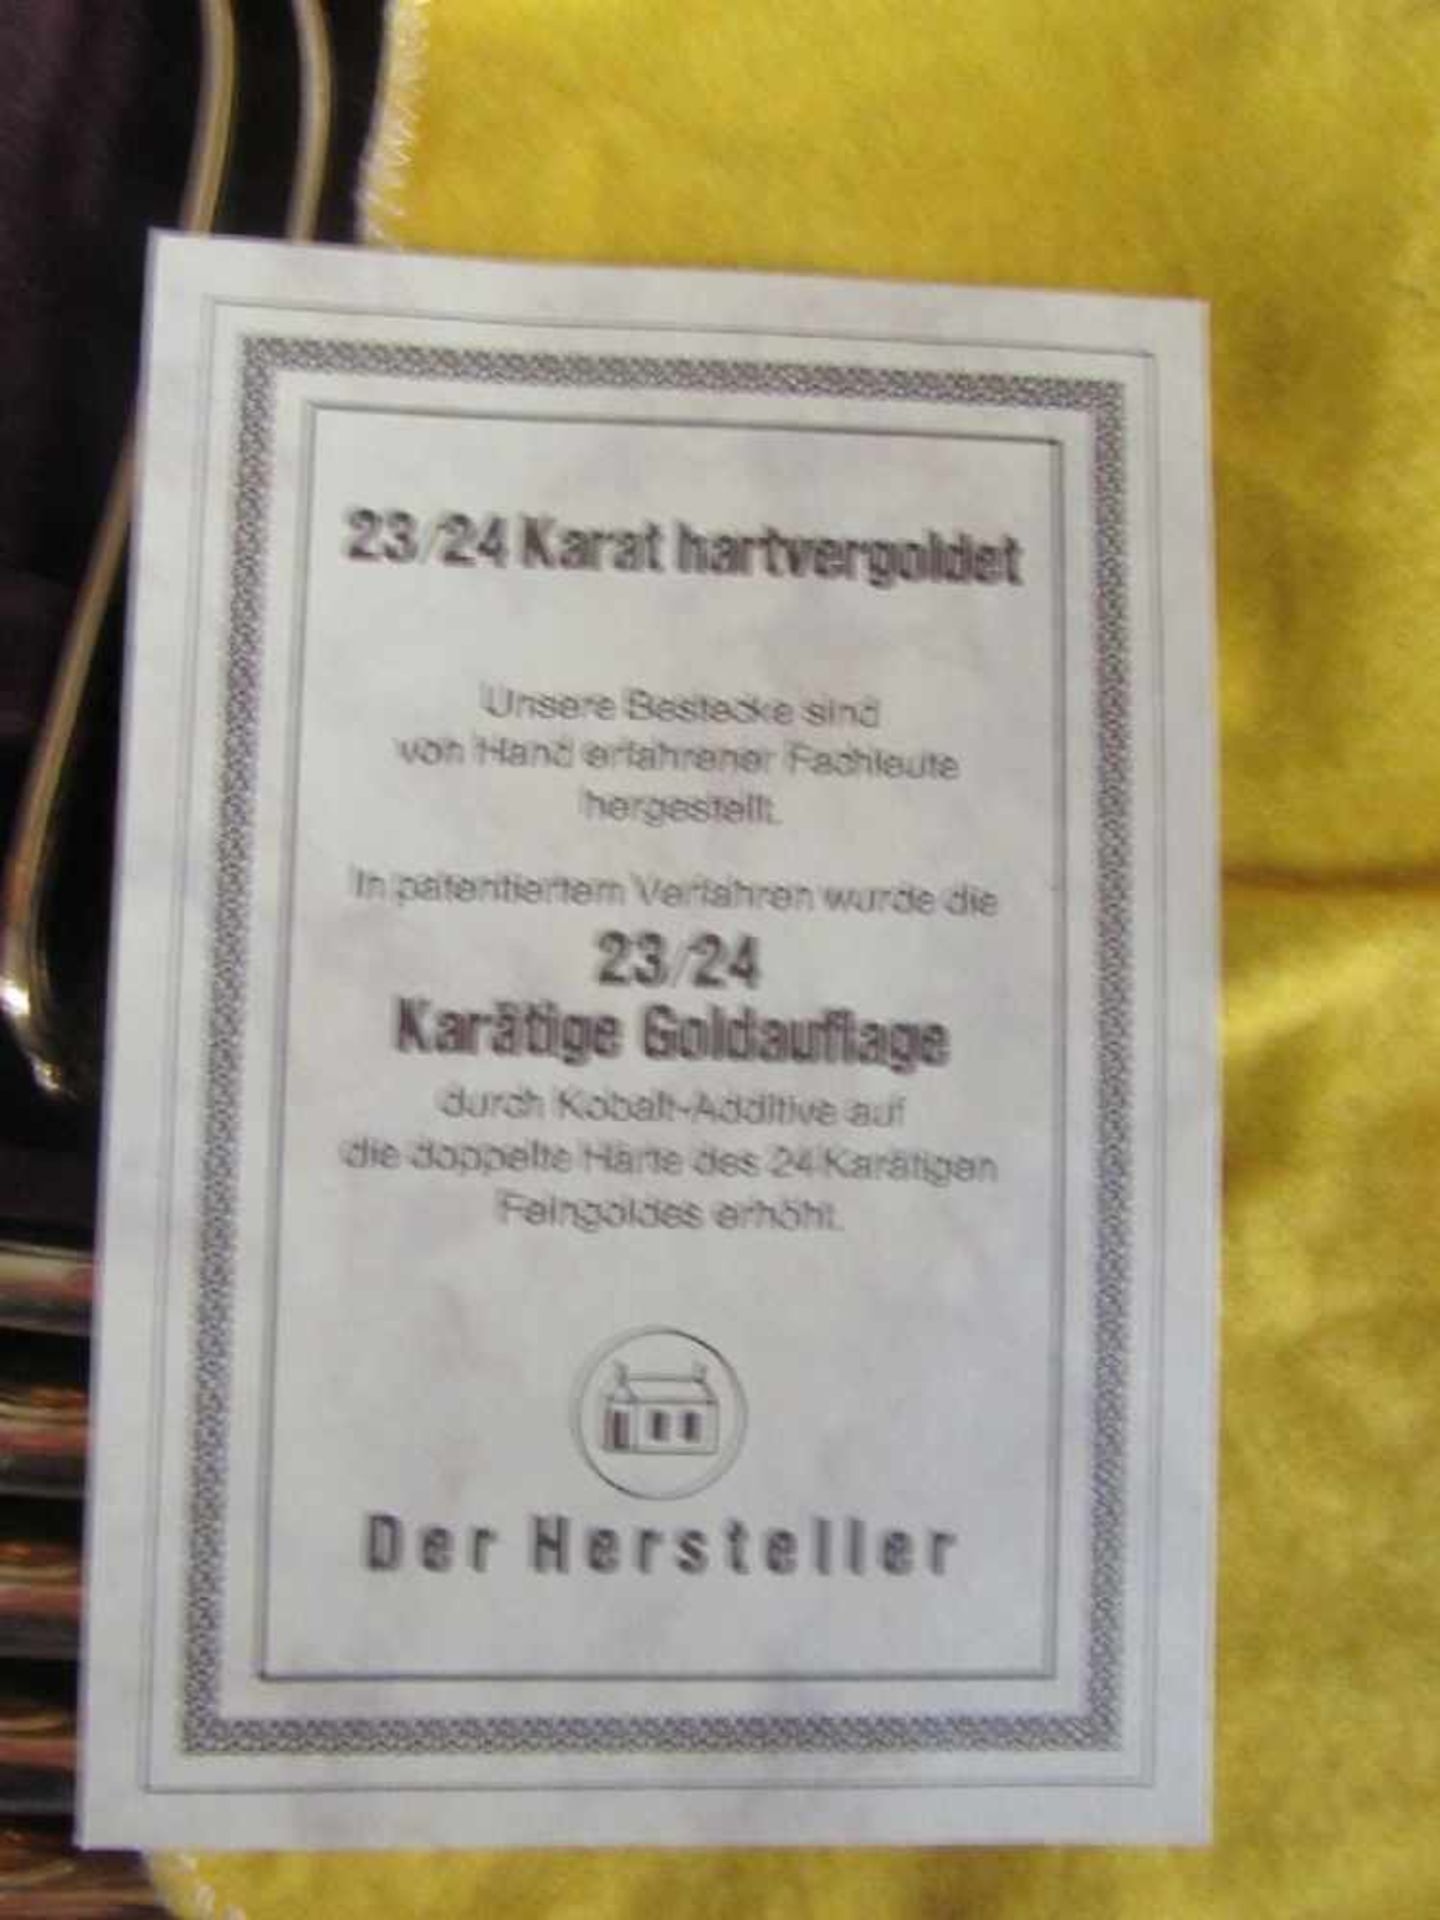 Besteckkoffer Solingen unbenutzt 24 Karat hartvergoldet komplett - Image 4 of 4